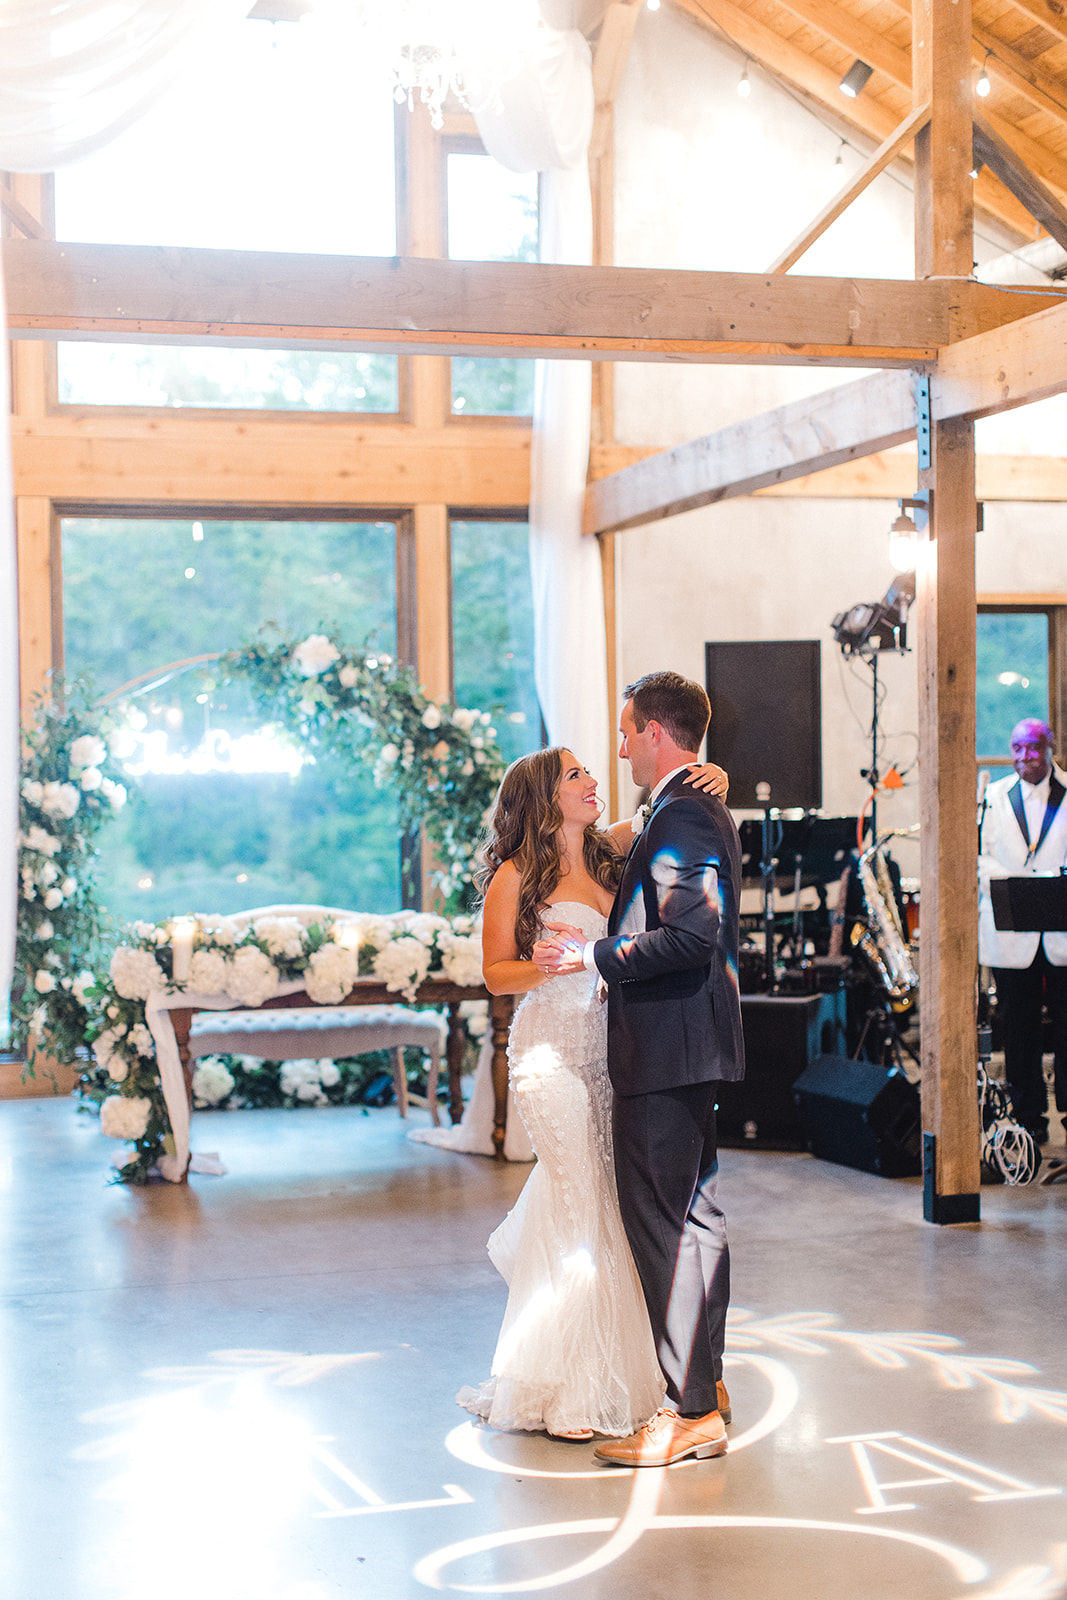 Bride and Groom First Dance at Cedarmont Farm Elegant Wedding Venue